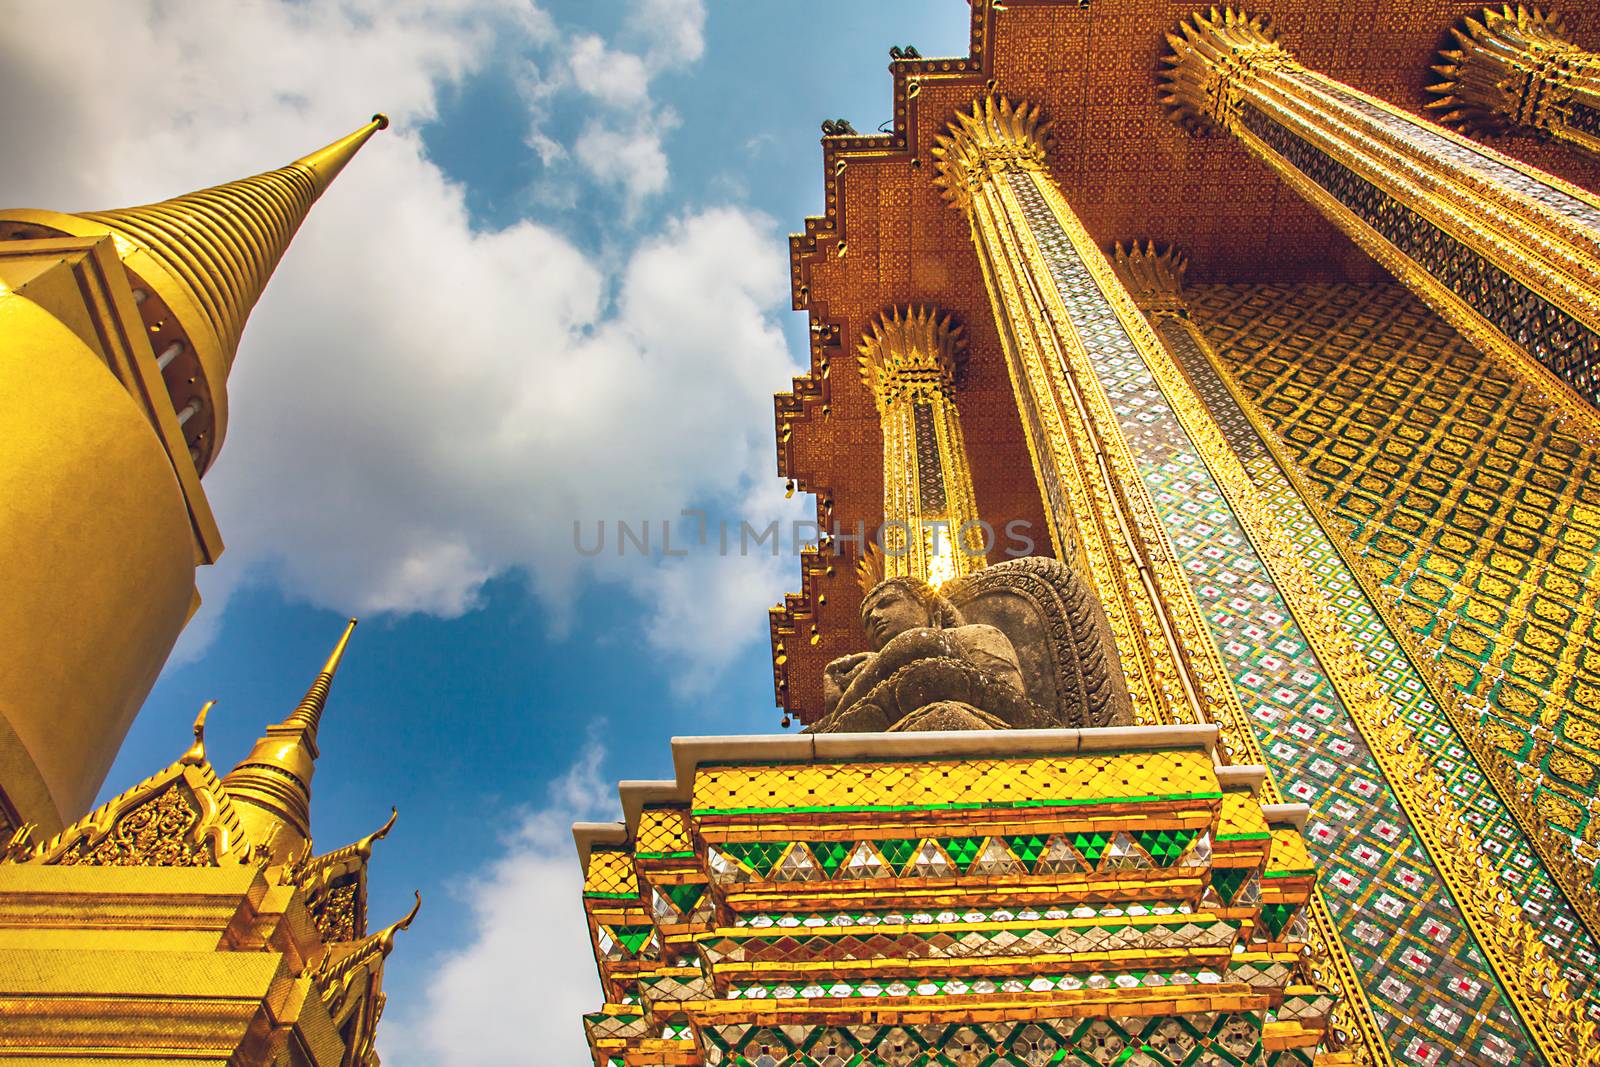 In the Royal Palace of the Great Palace Bangkok Thailand by Makeral